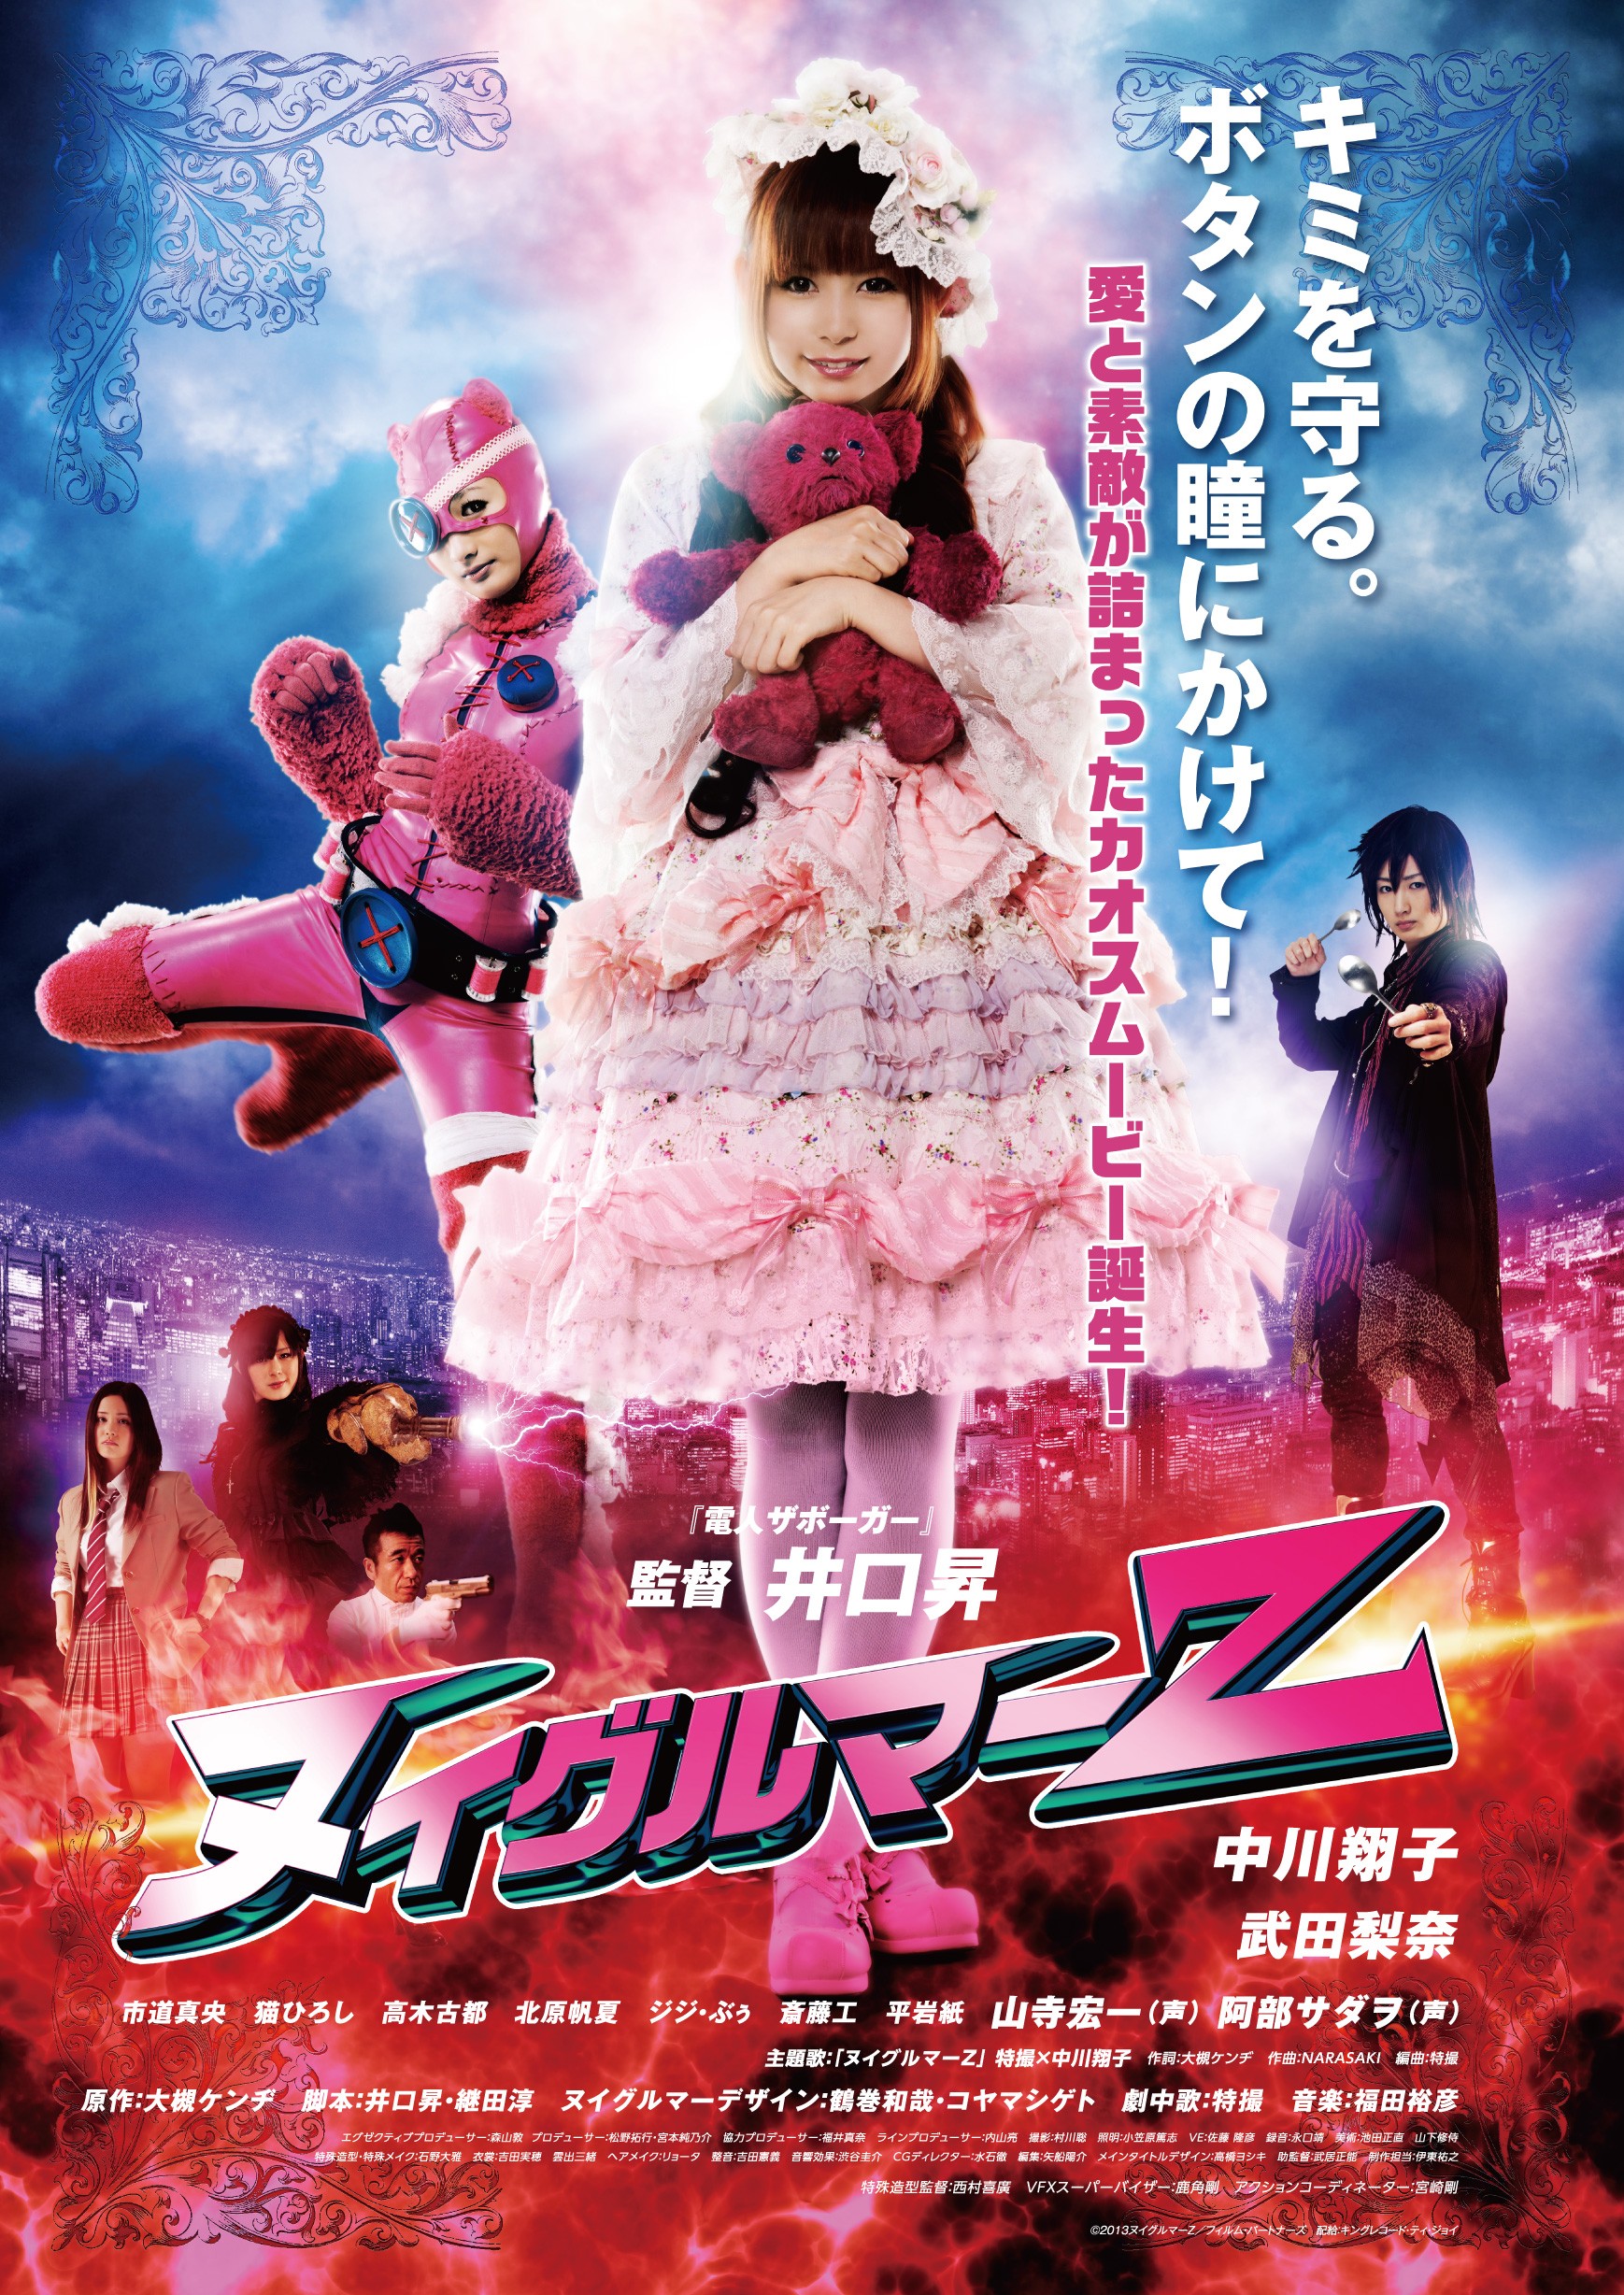 Mega Sized Movie Poster Image for Nuigurumâ Z (#1 of 3)